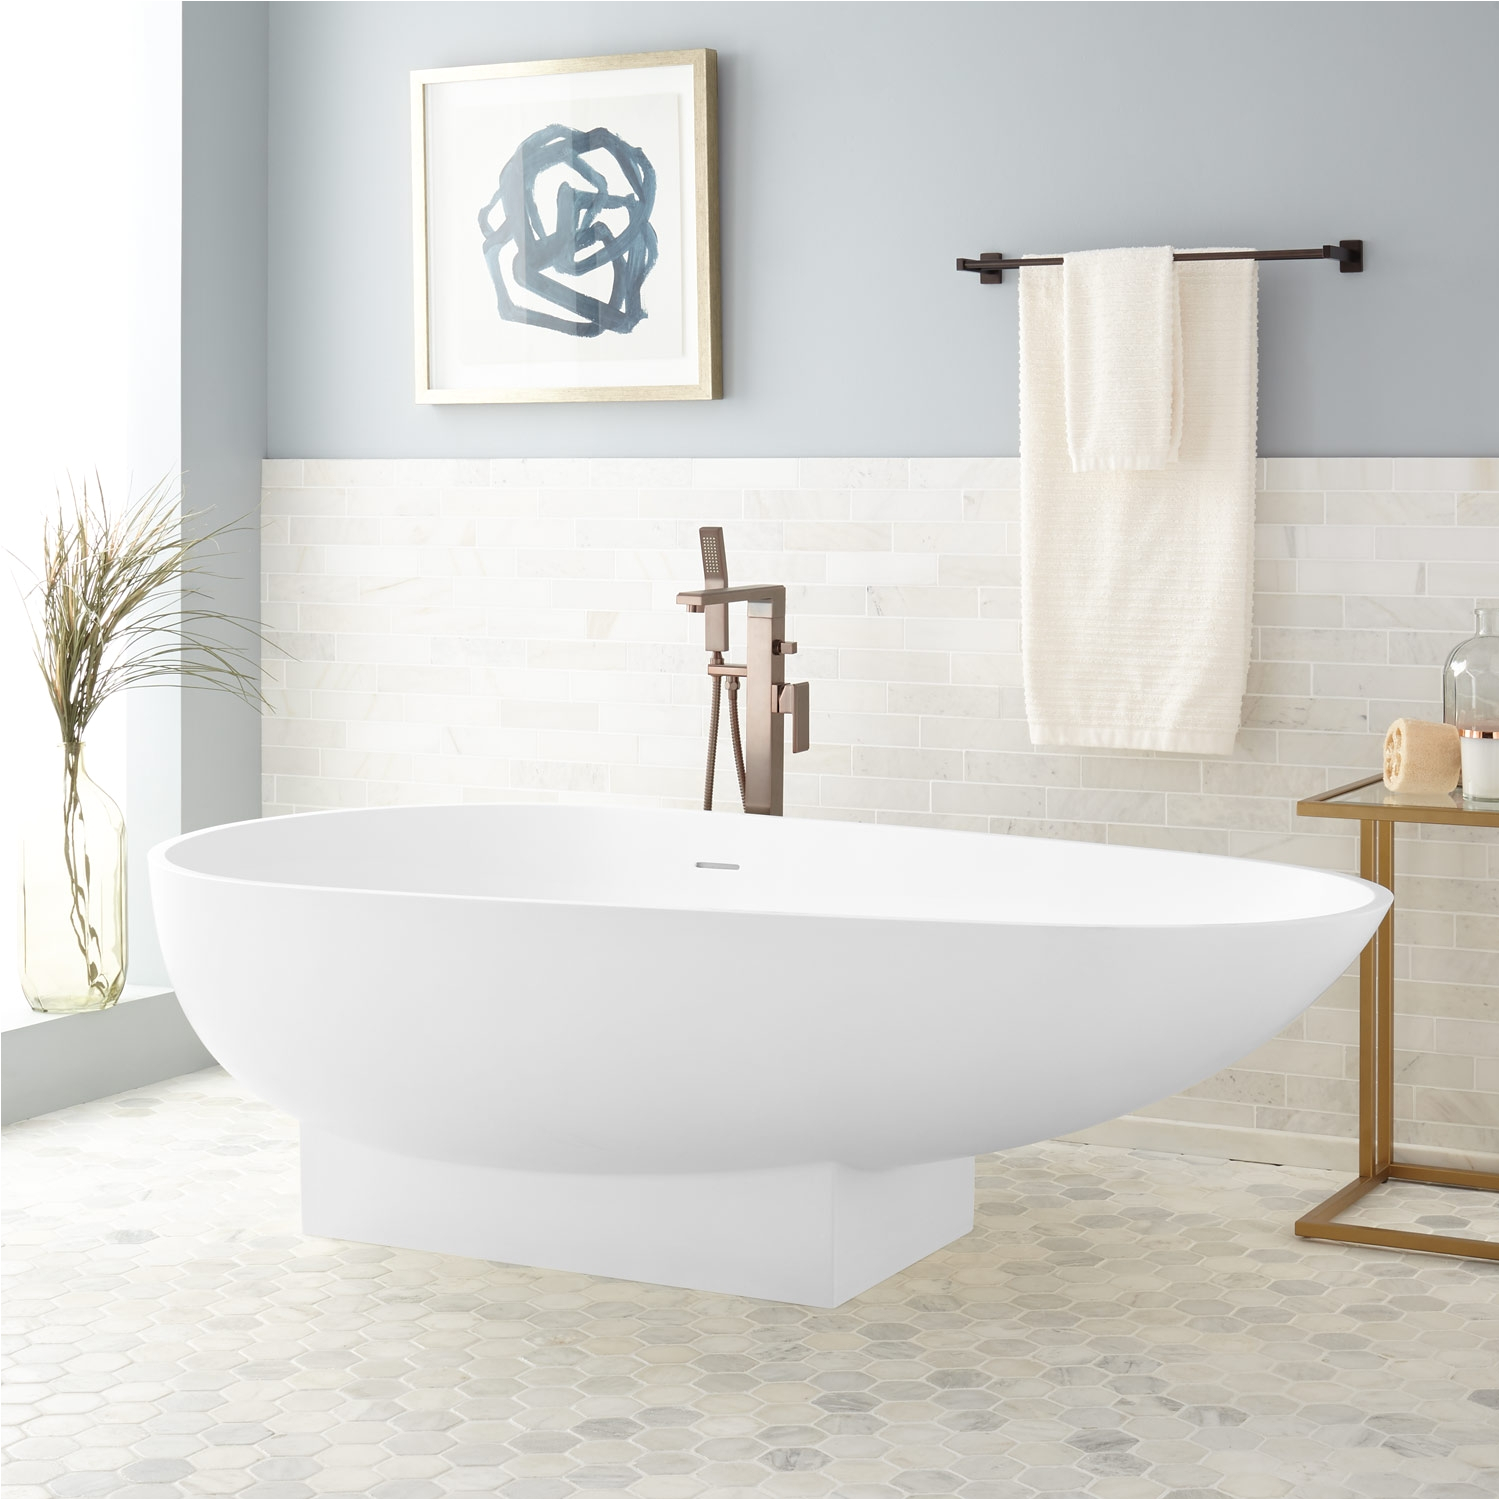 Signature Bath White Acrylic Freestanding Bathtub Oval Freestanding Bathtub